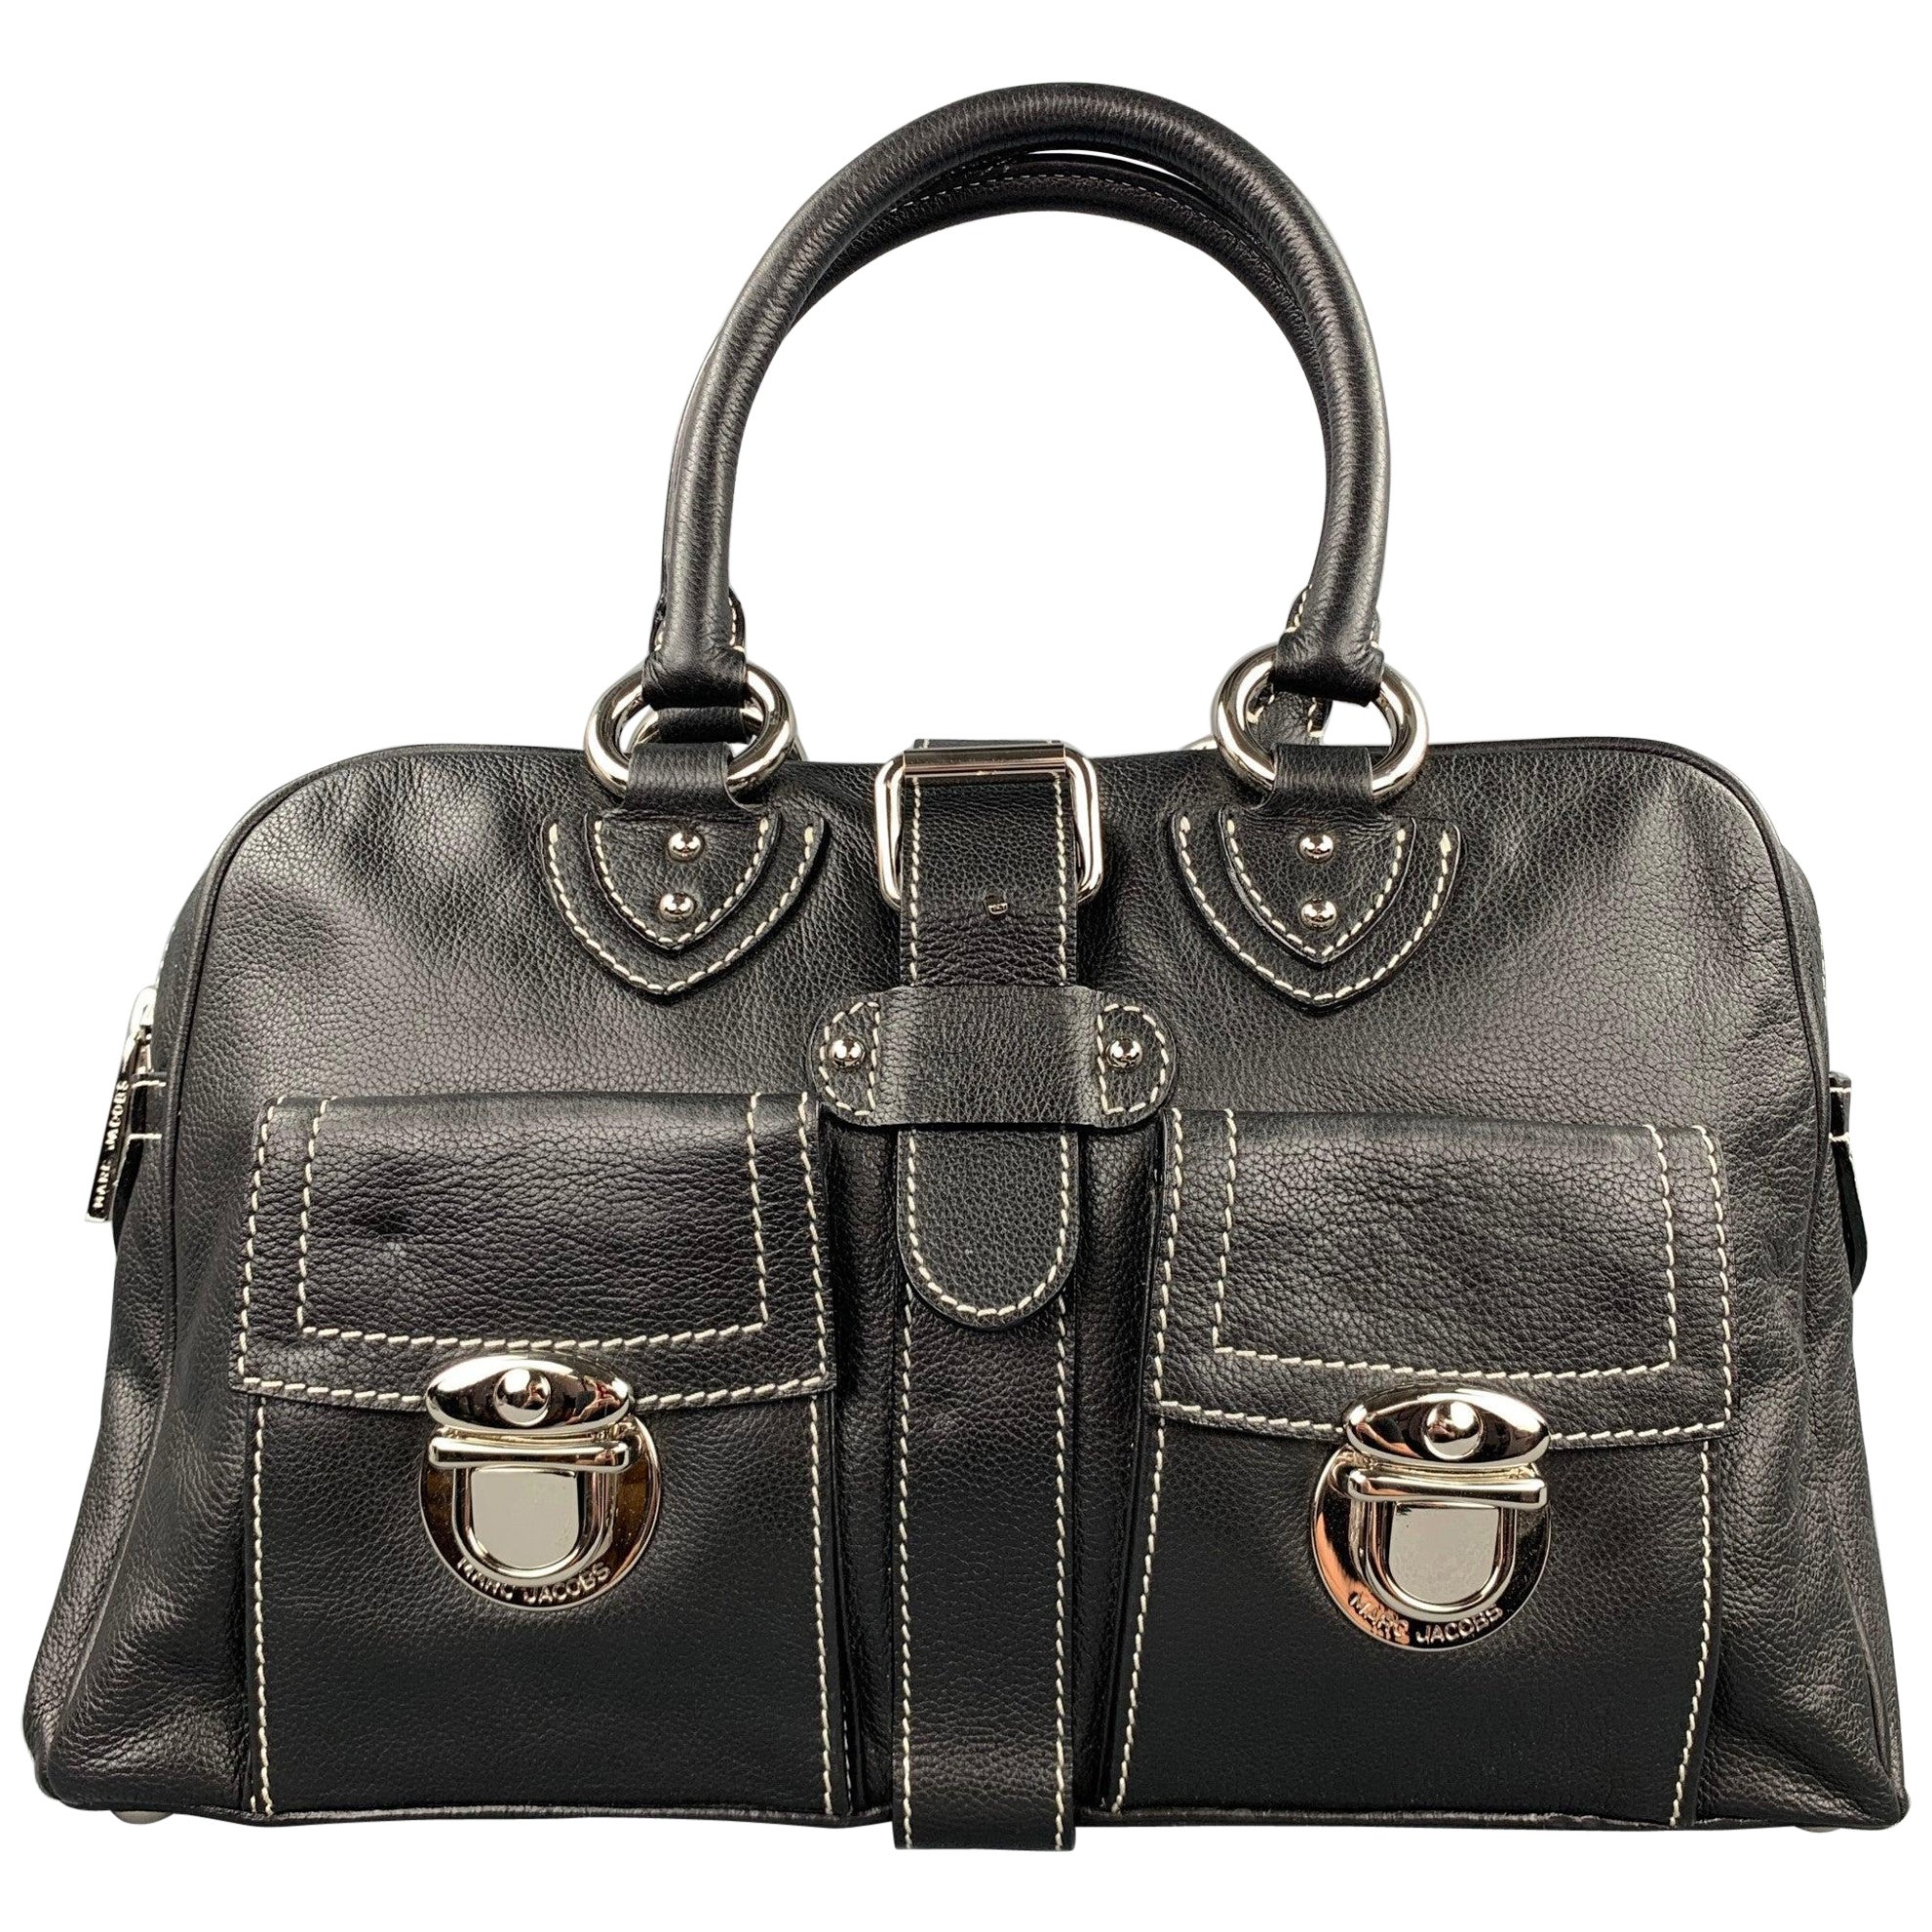 MARC JACOBS Black Contrast Stitching Leather Top Handles Handbag For Sale